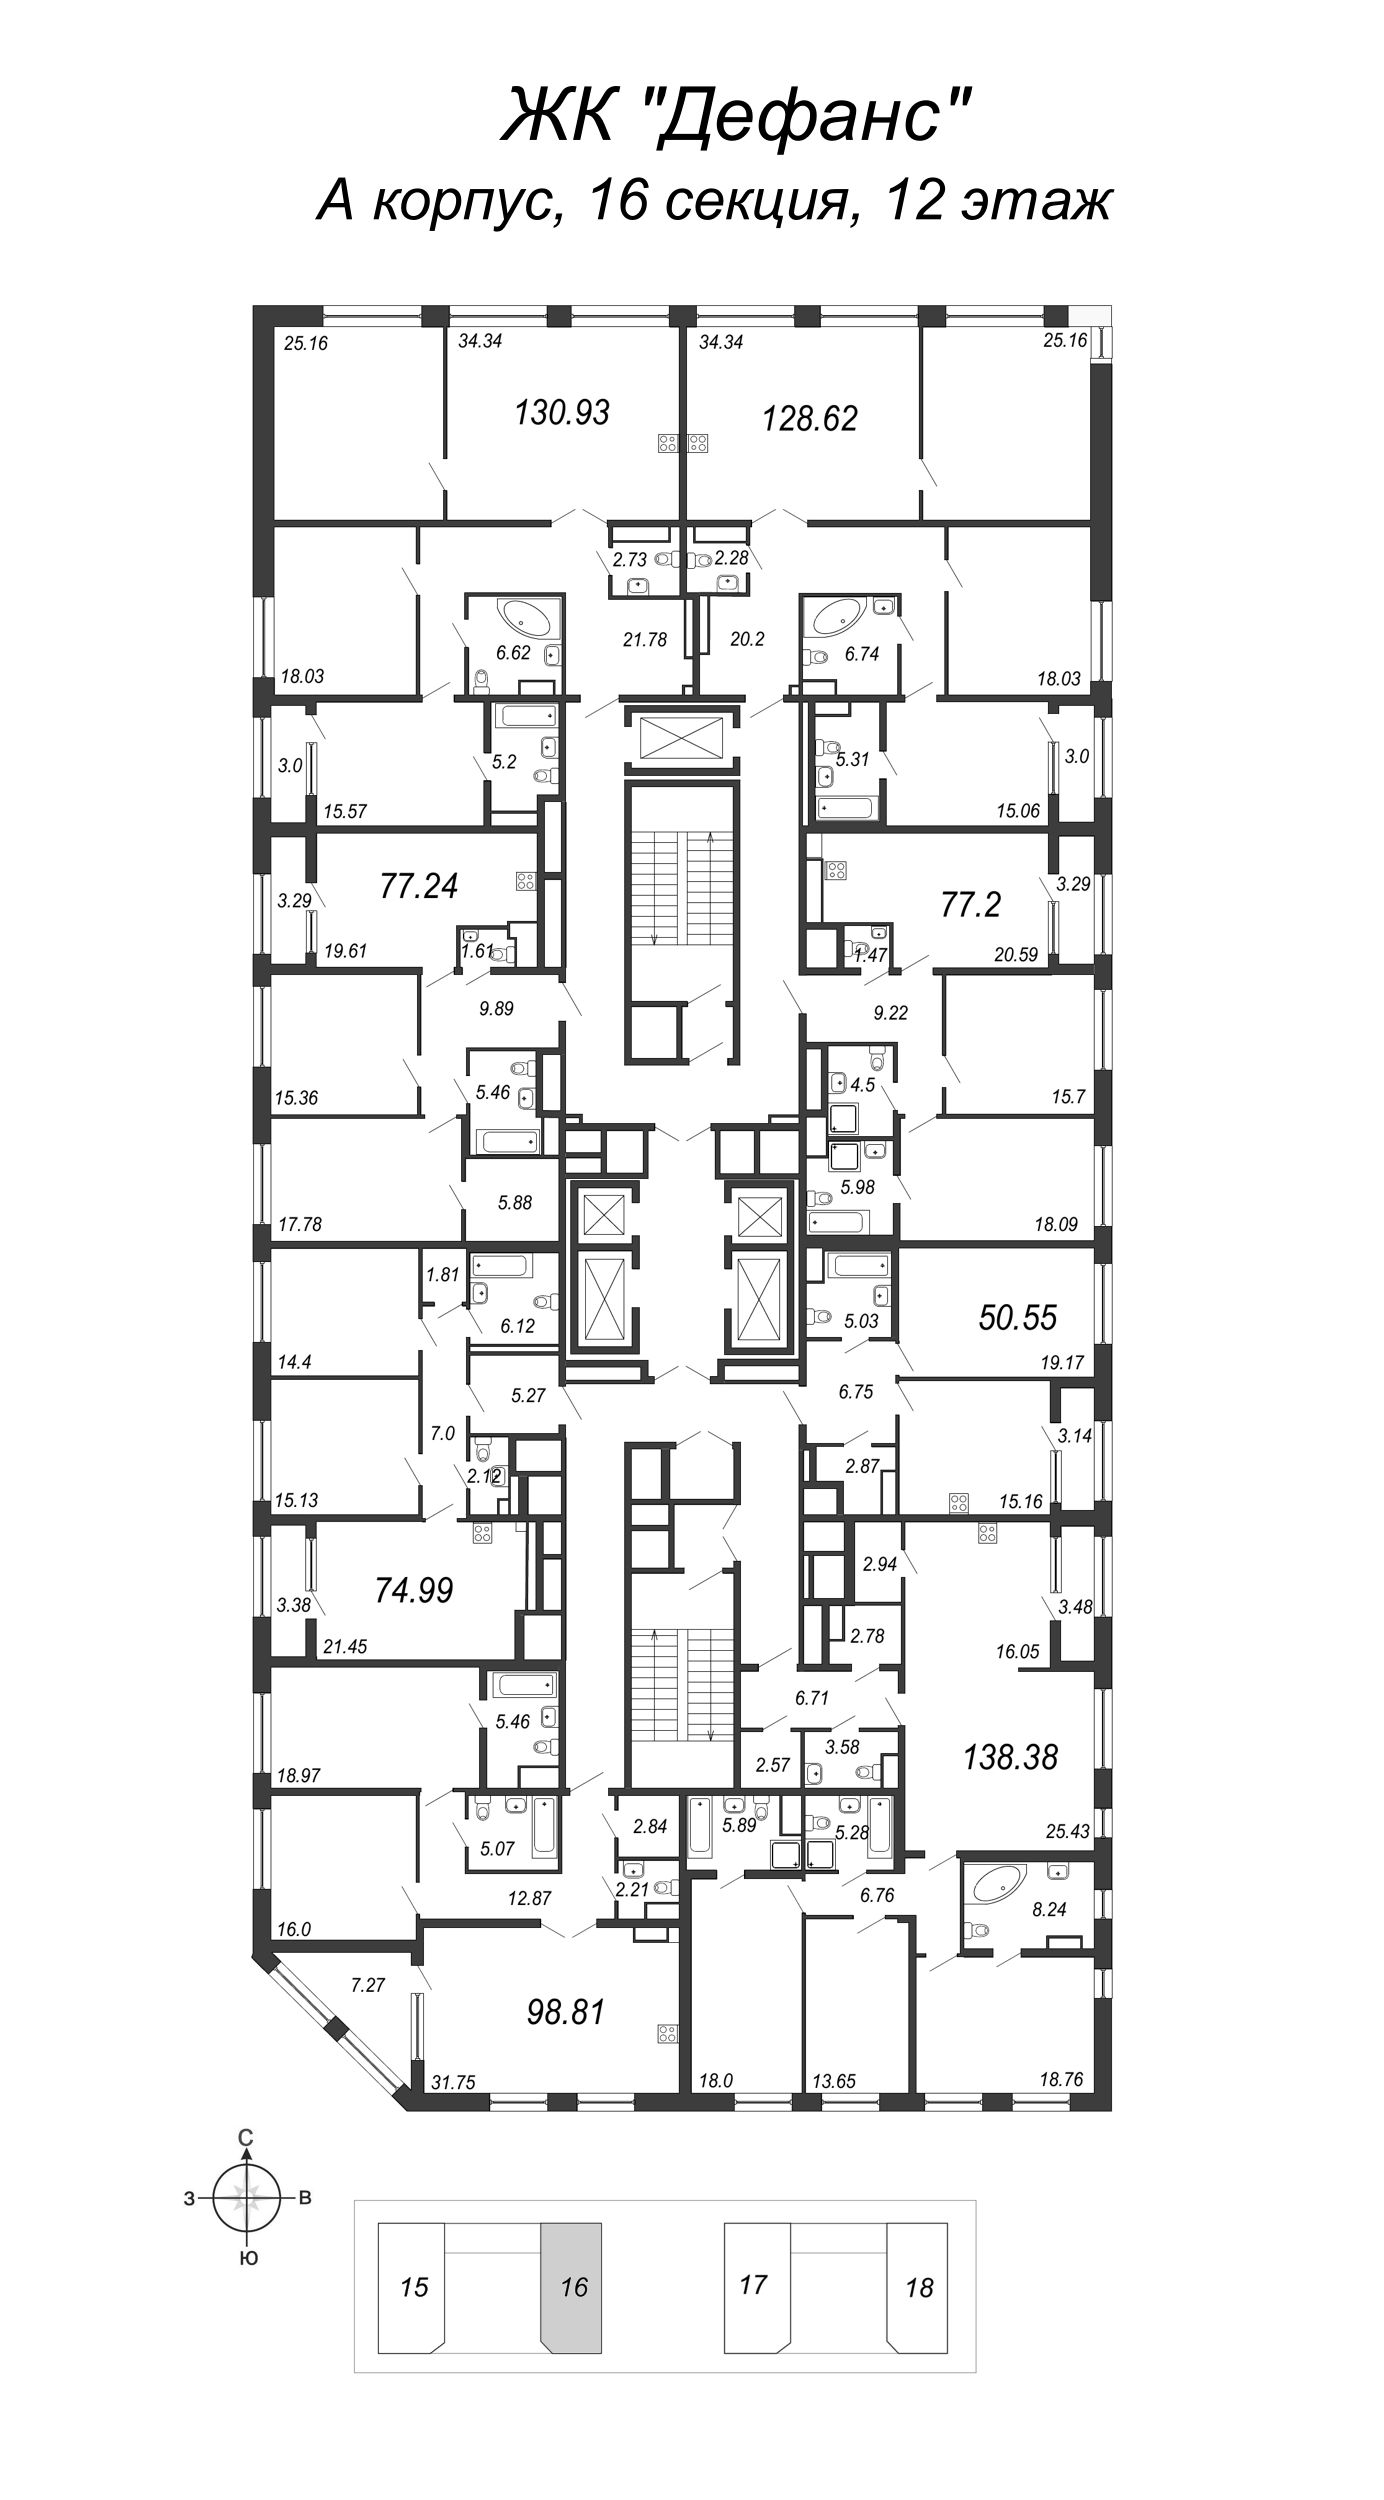 4-комнатная (Евро) квартира, 130.93 м² - планировка этажа